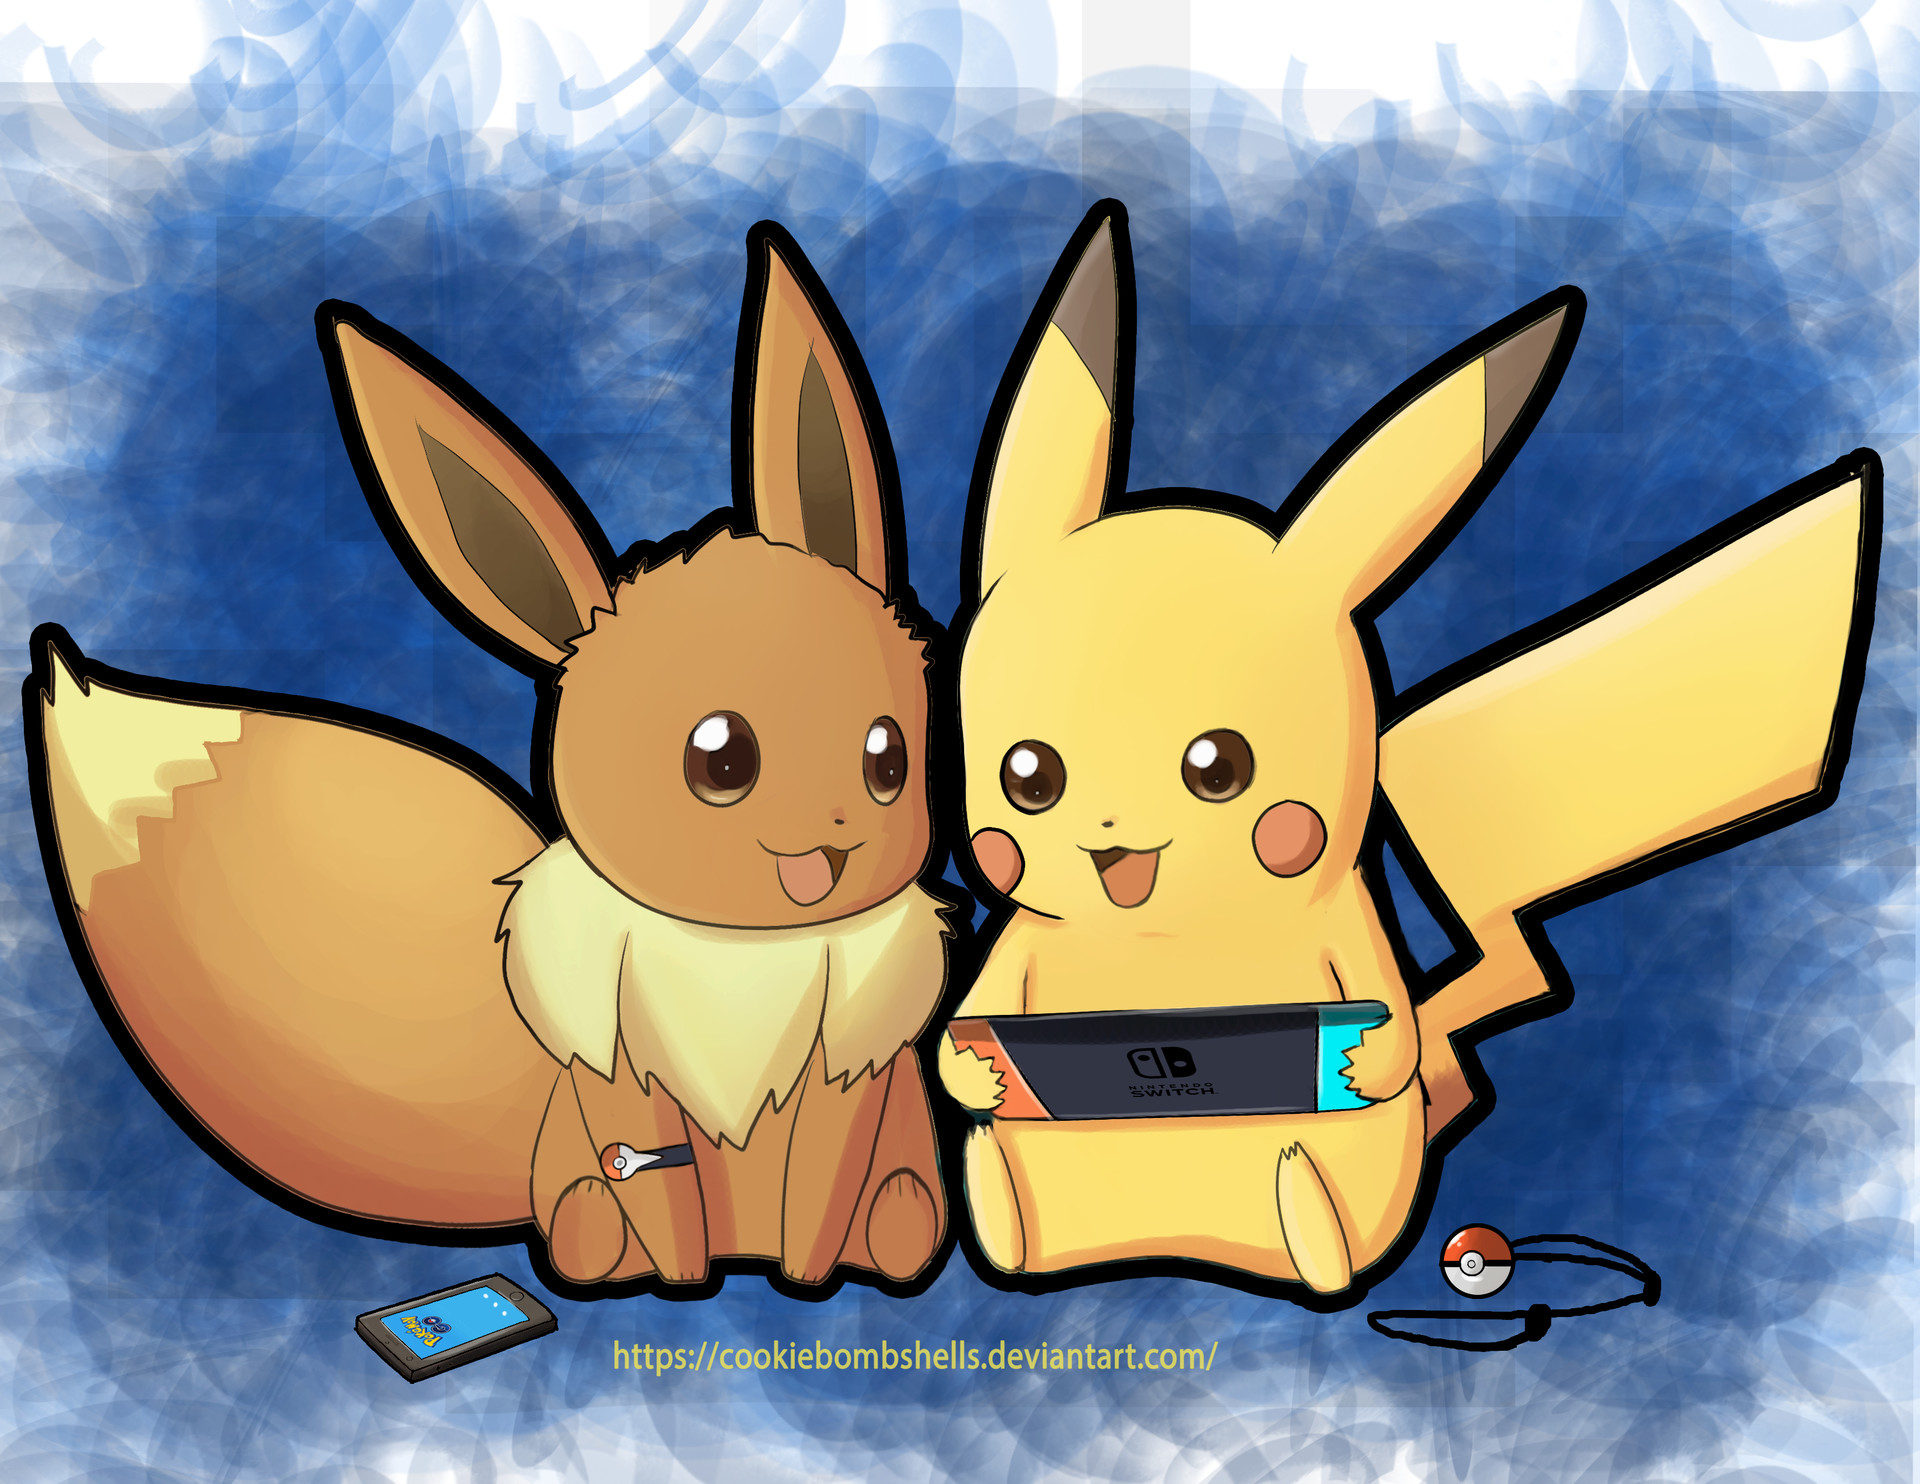 CookieBombShells ! - Pikachu and Eevee